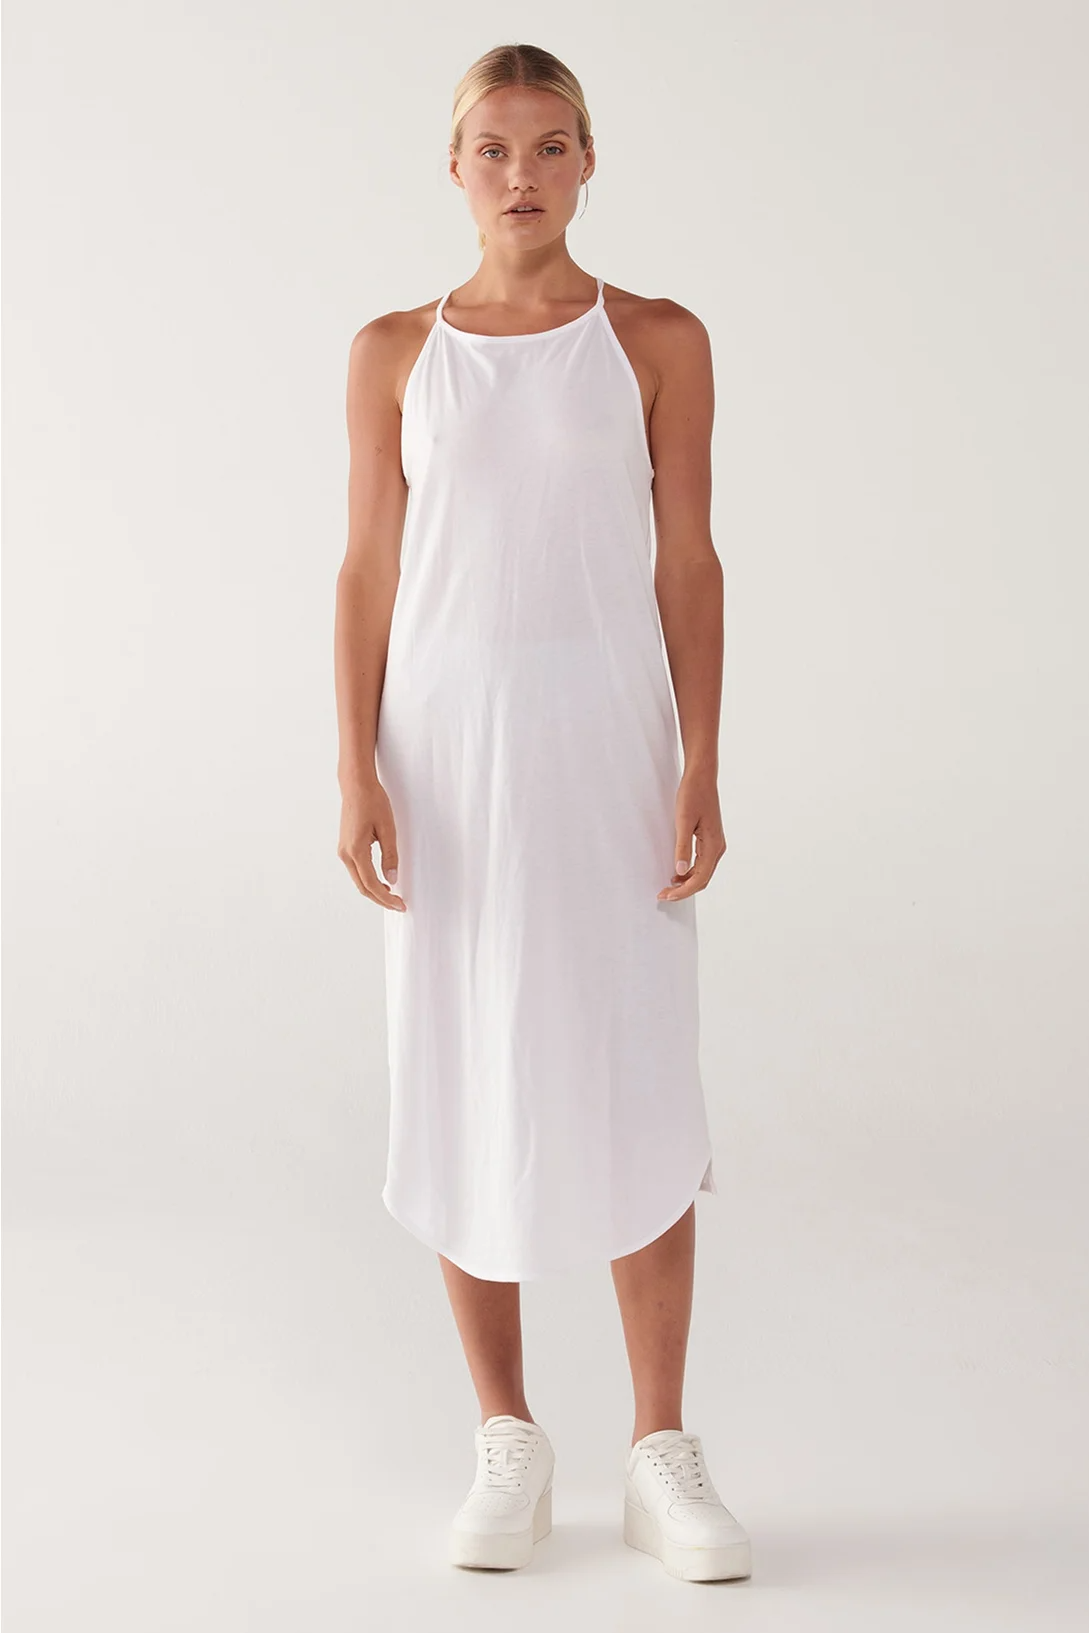 Taylor Extension Dress - White